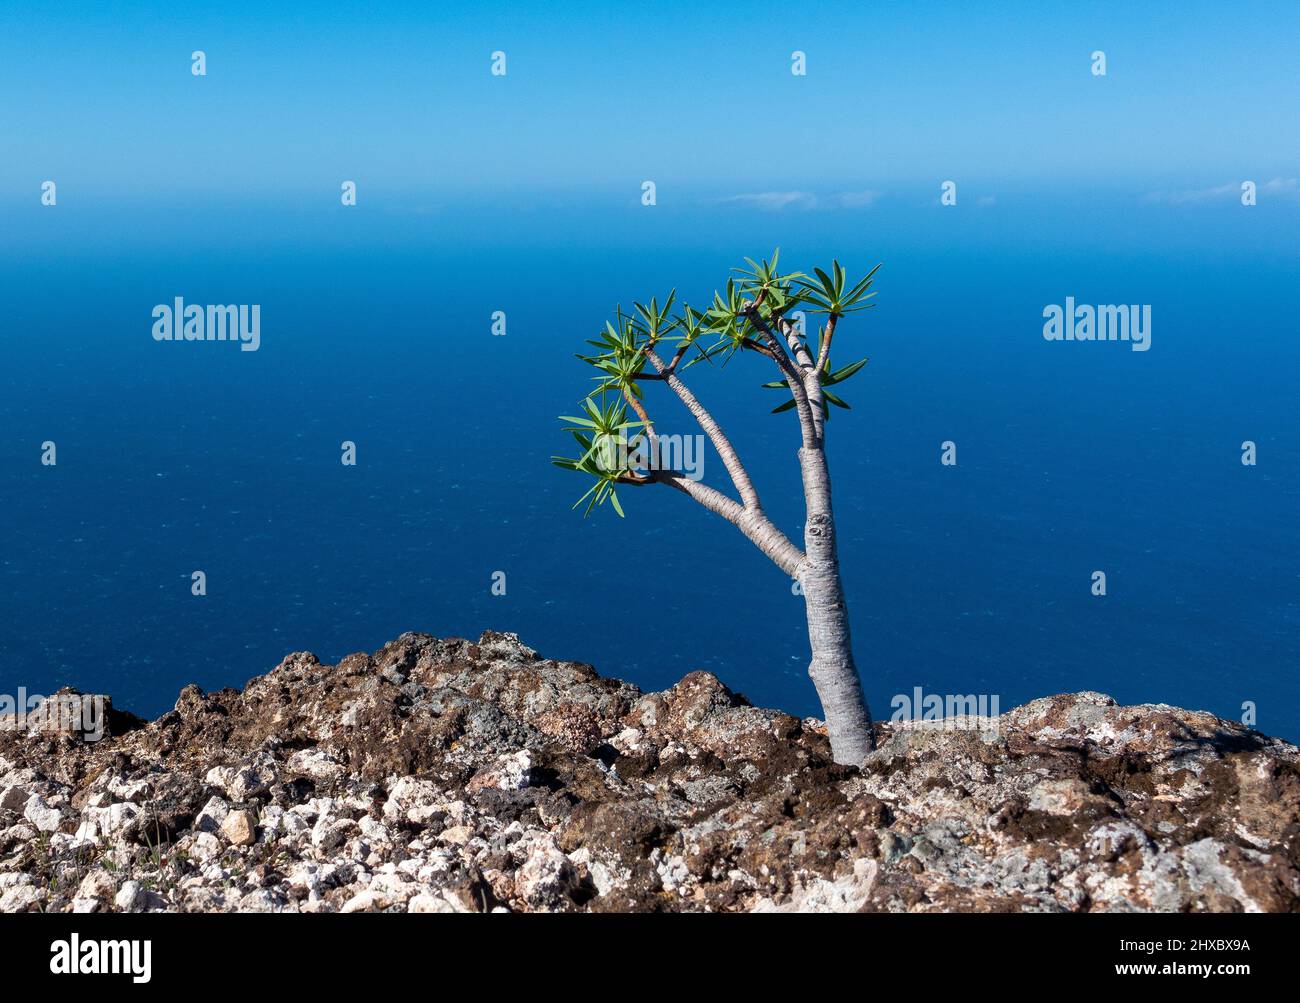 A young Dragon Tree - Dracaena cinnabari - growing on the cliff tops in La Gomera, Canary Islands, Spain Stock Photo